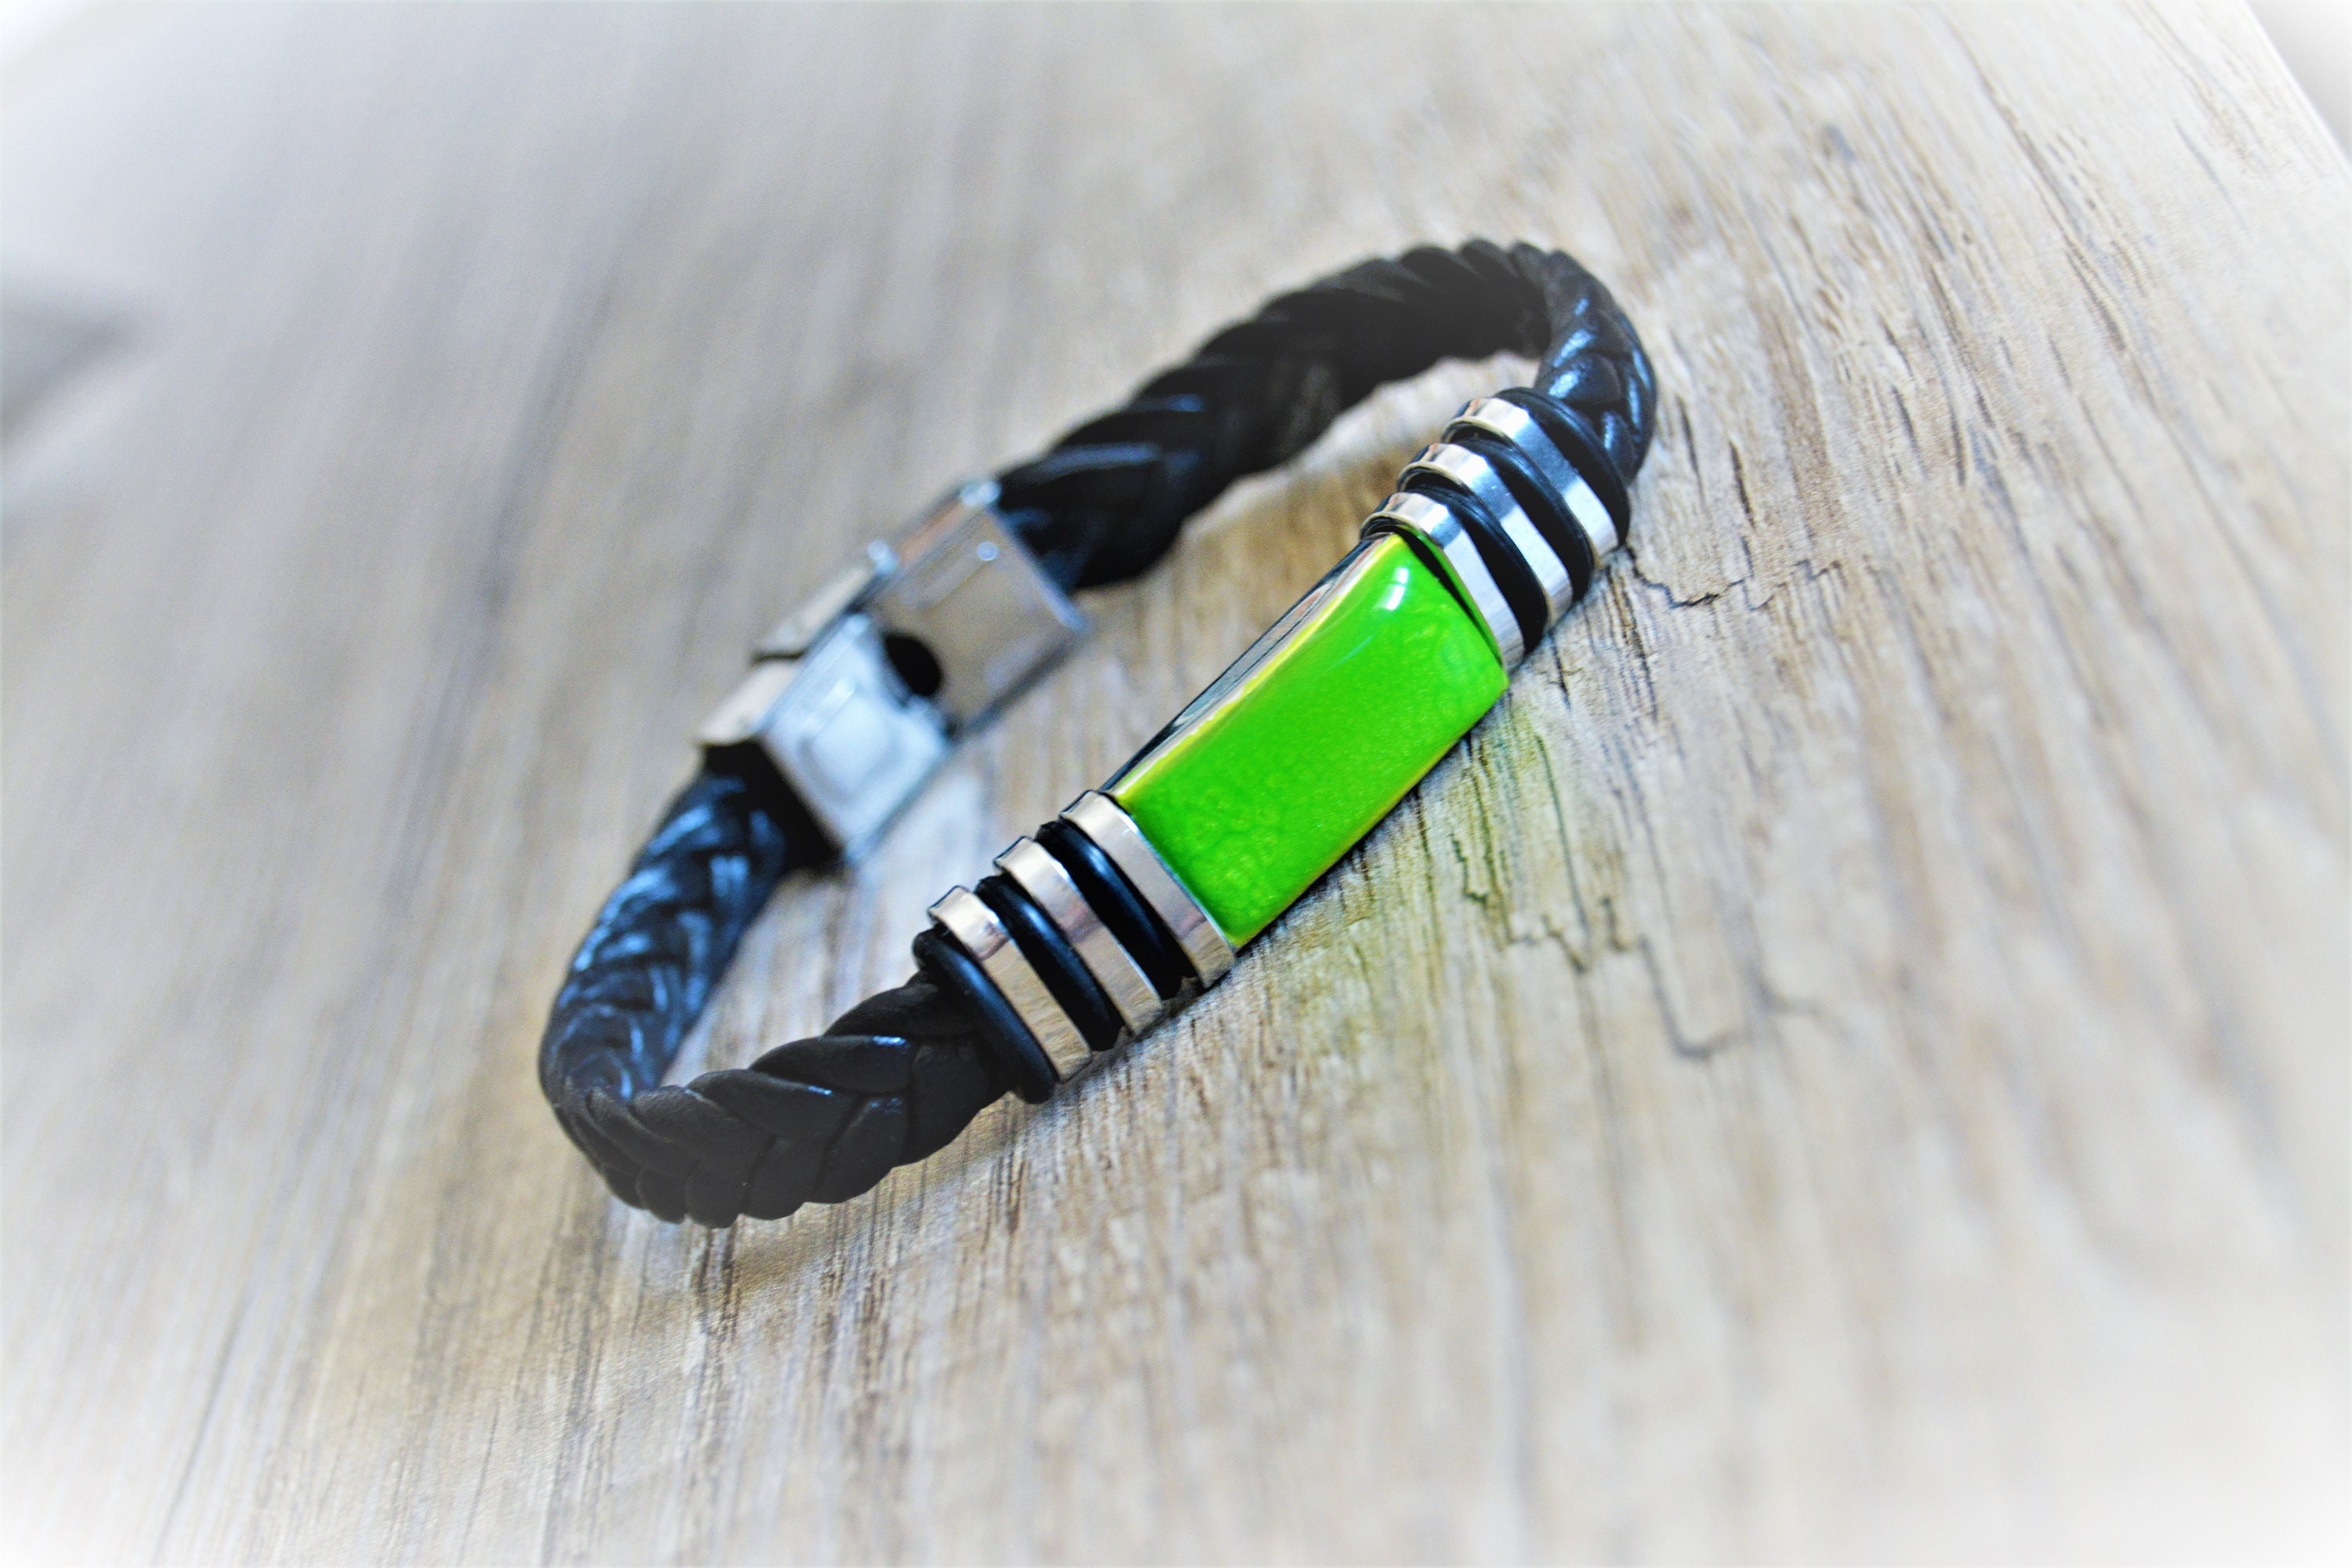 Buy ZAVERI PEARLS Green & Black Dazzling Artificial Stones Contemporary  Adjustable Bracelet For Women-ZPFK16711 at Amazon.in